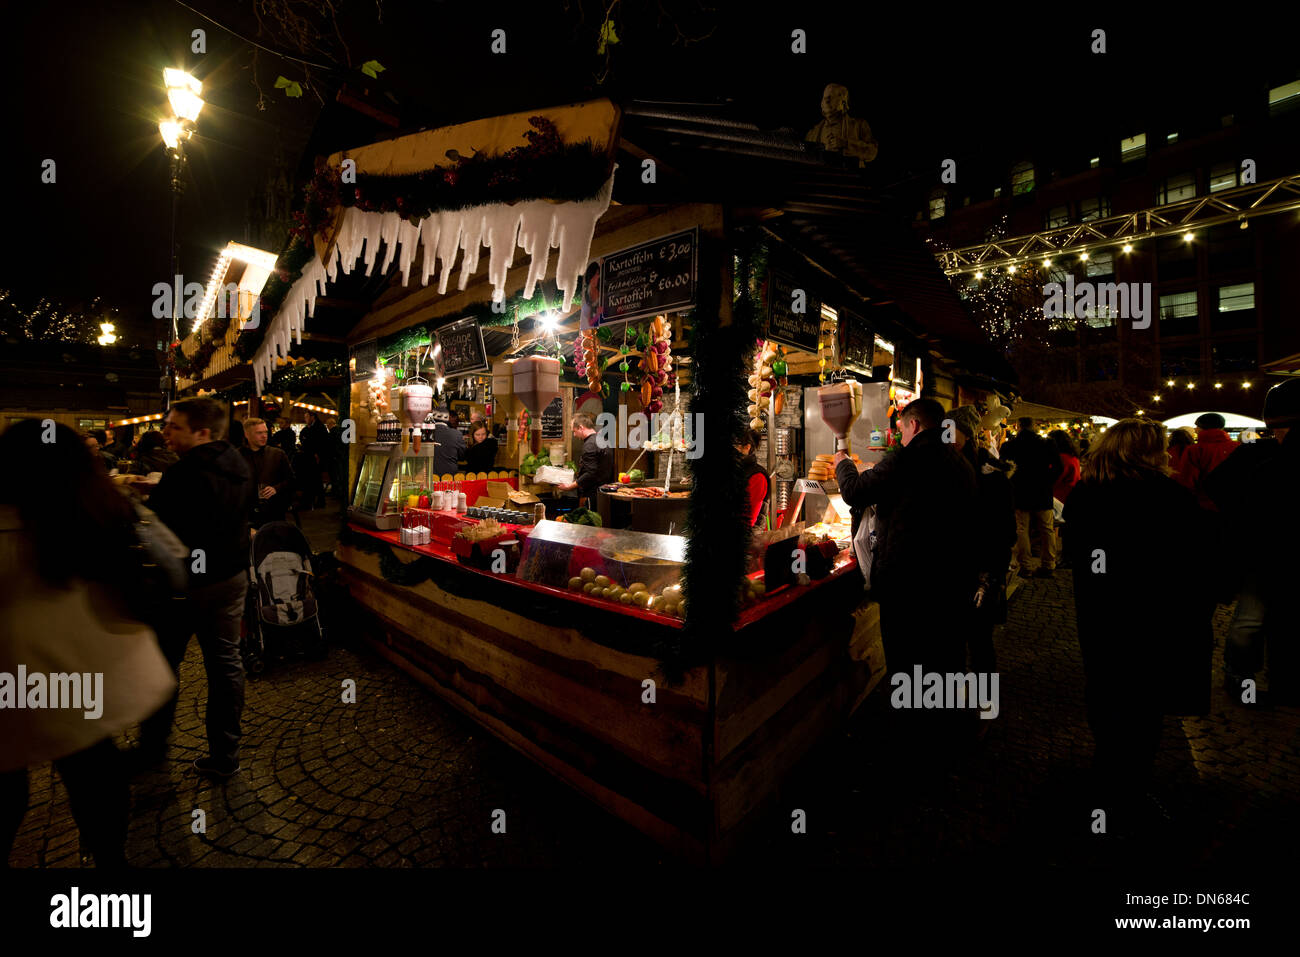 Manchester, Weihnachten, Markt, stall, 2013, Nacht, europäisch, Deutsch, Italienisch, Winter, Dezember, England, EU, Commerce, Business, Stockfoto